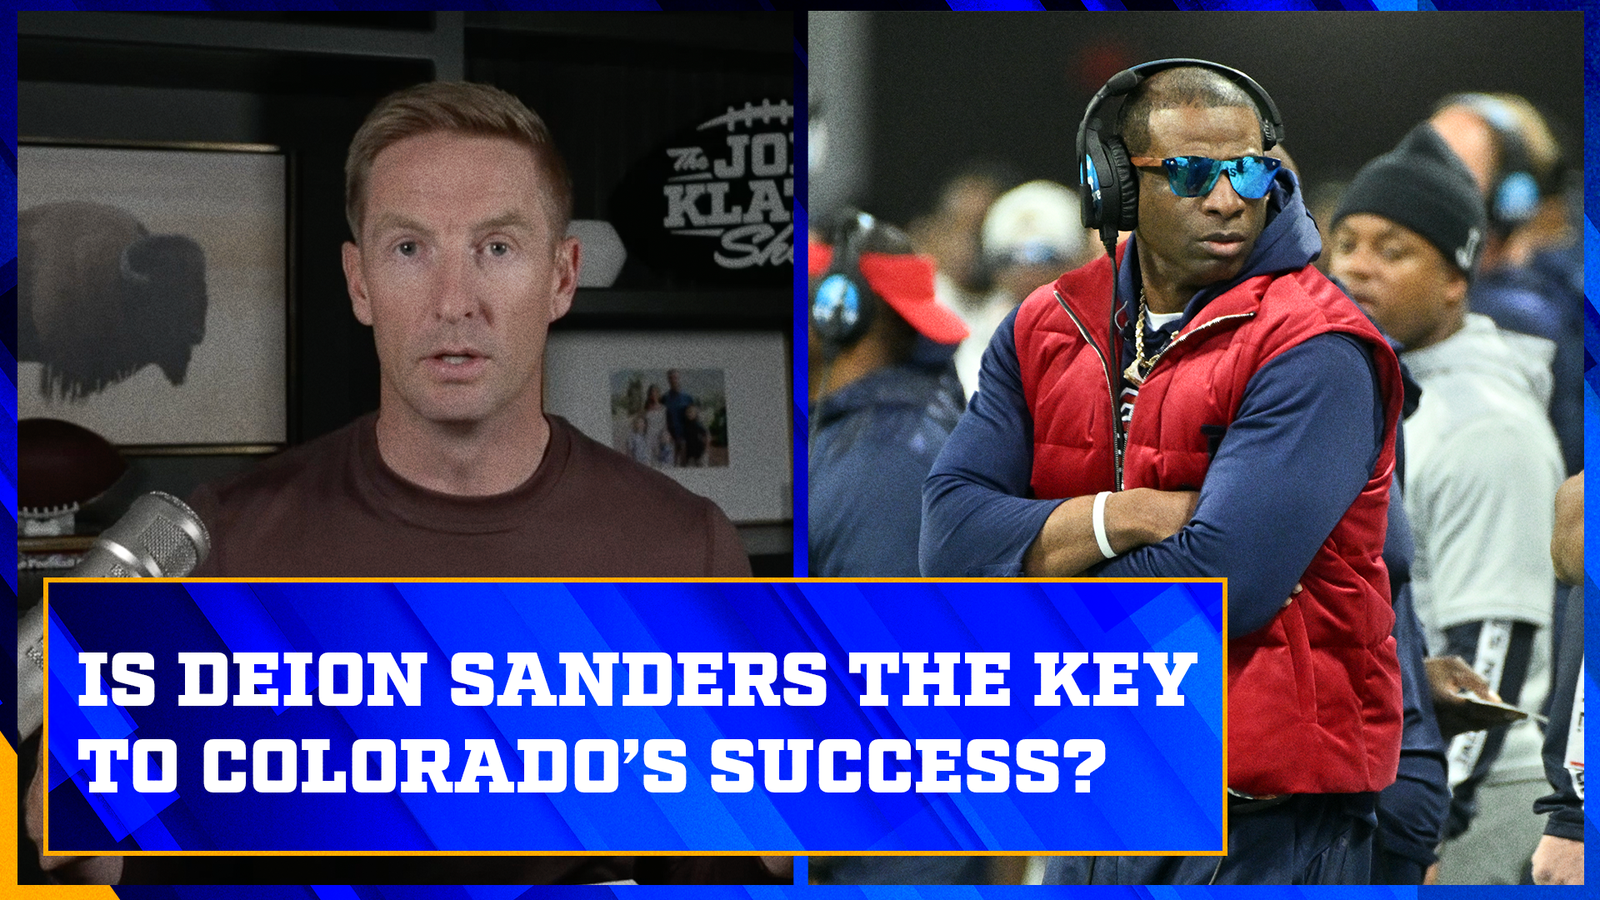 Can Colorado climb with Deion Sanders?